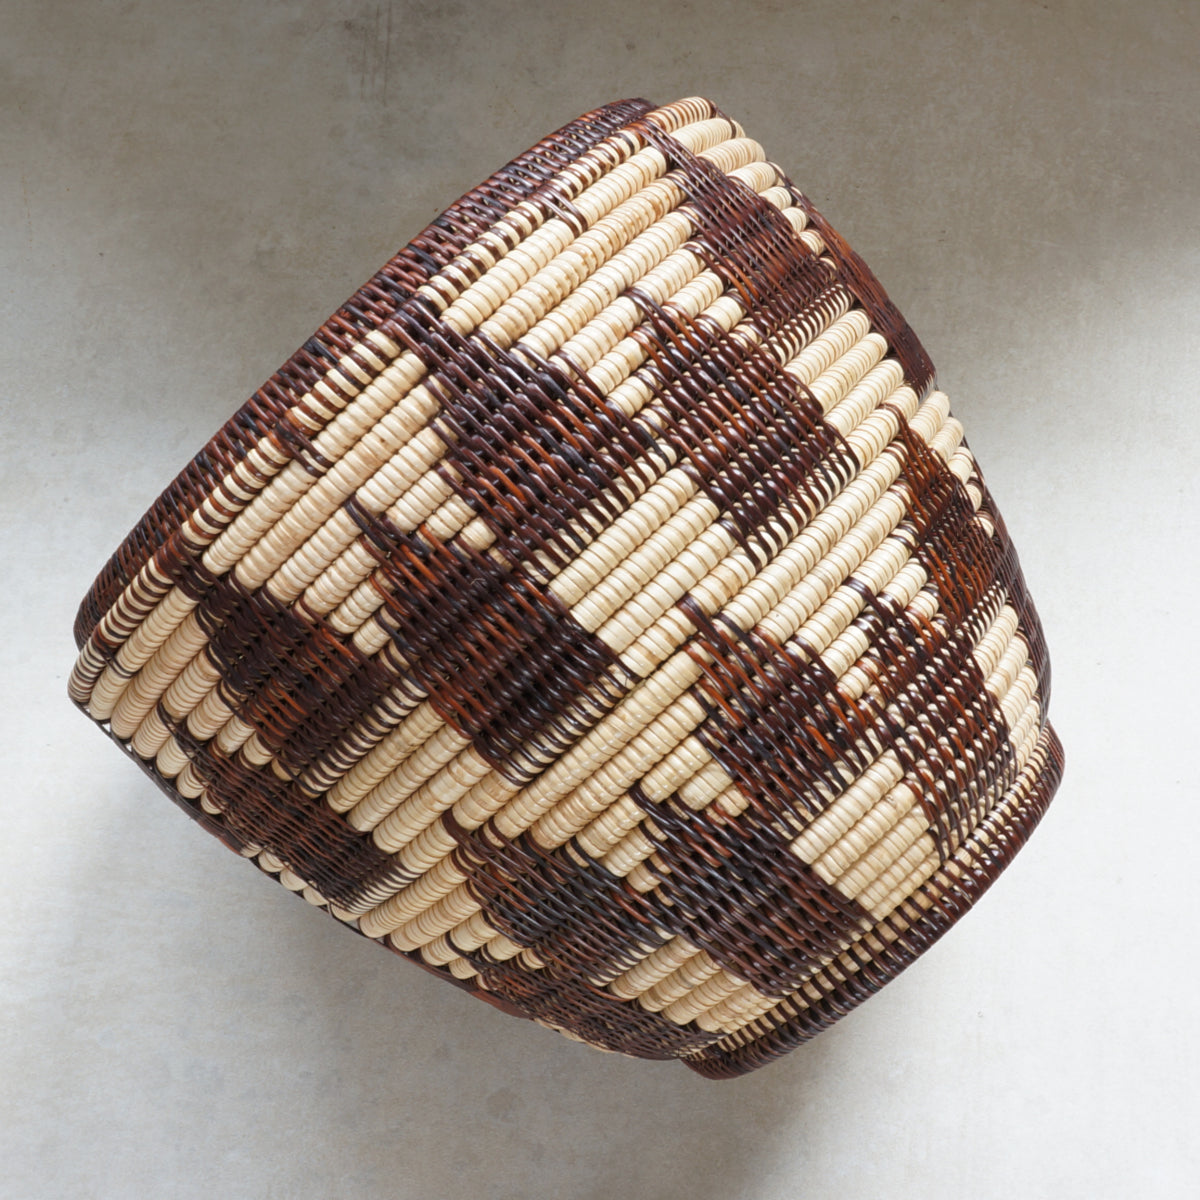 High QualityI The Khmer Art Rattan Basket I Artisan-Made